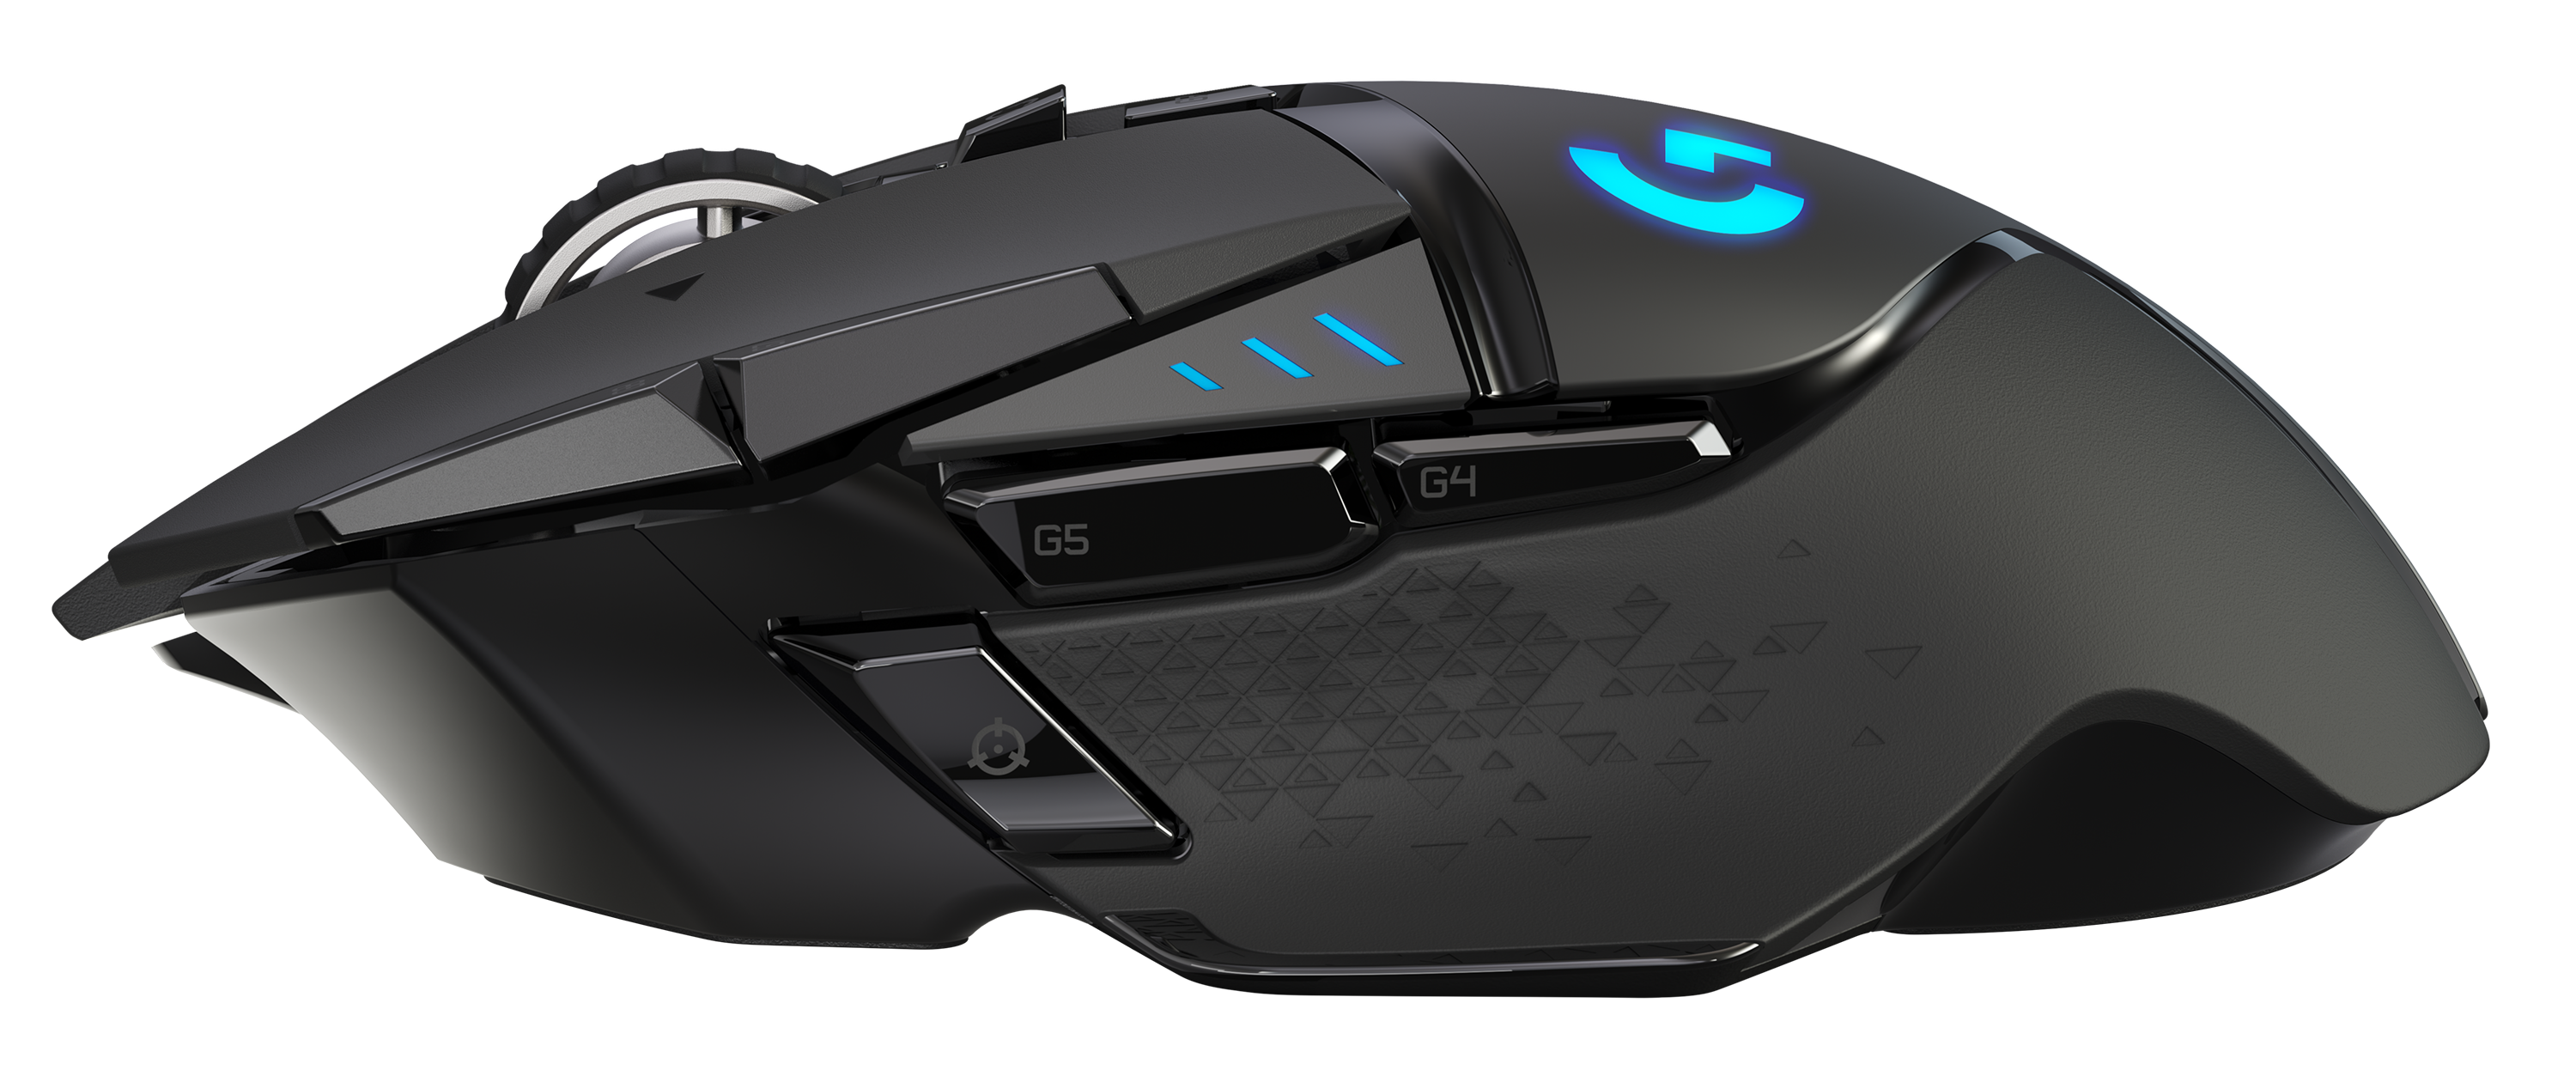 Logitech G502 LIGHTSPEED - Best Wireless Gaming Mice